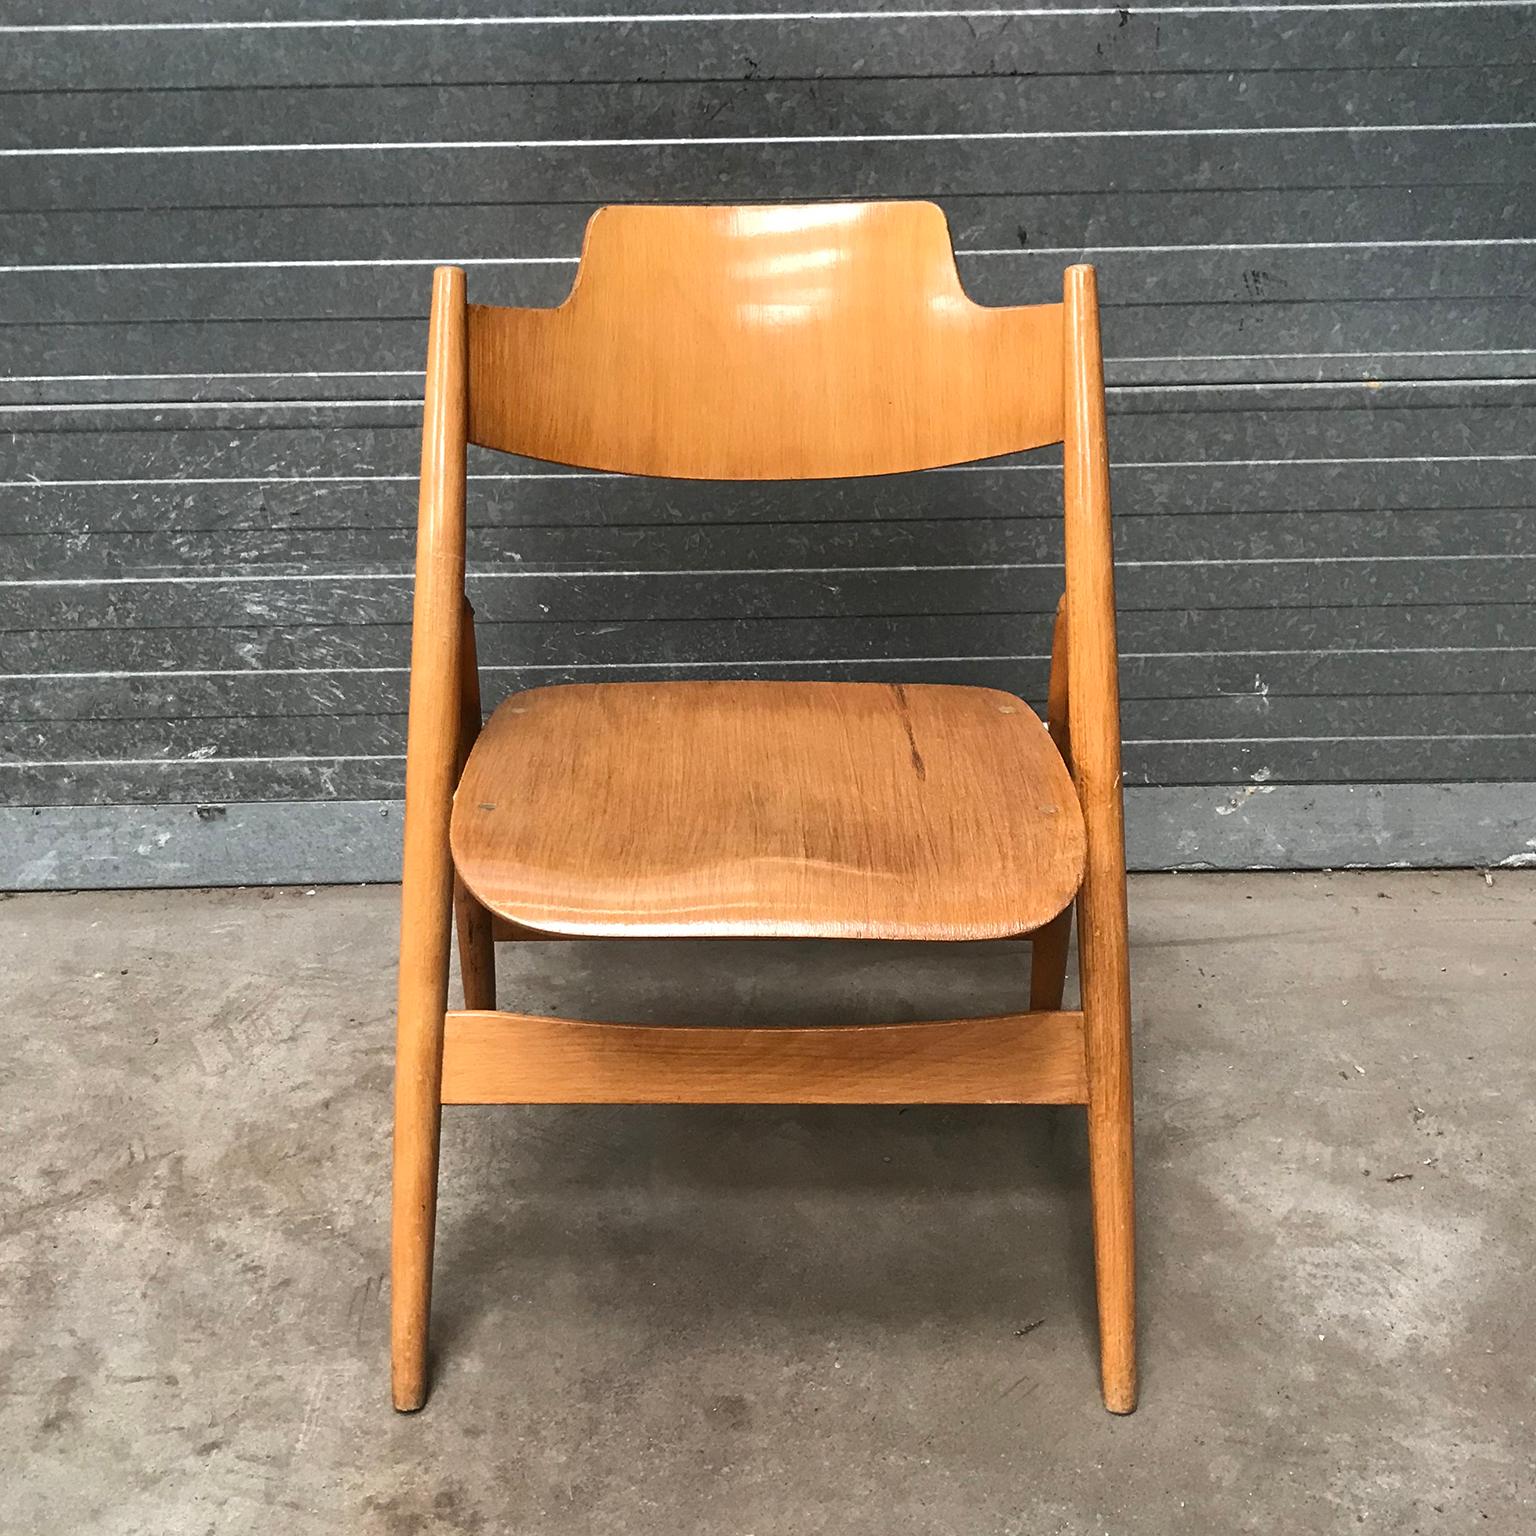 1952, Egon Eiermann for Wilde & Spieth, Wooden Folding Chair For Sale 2